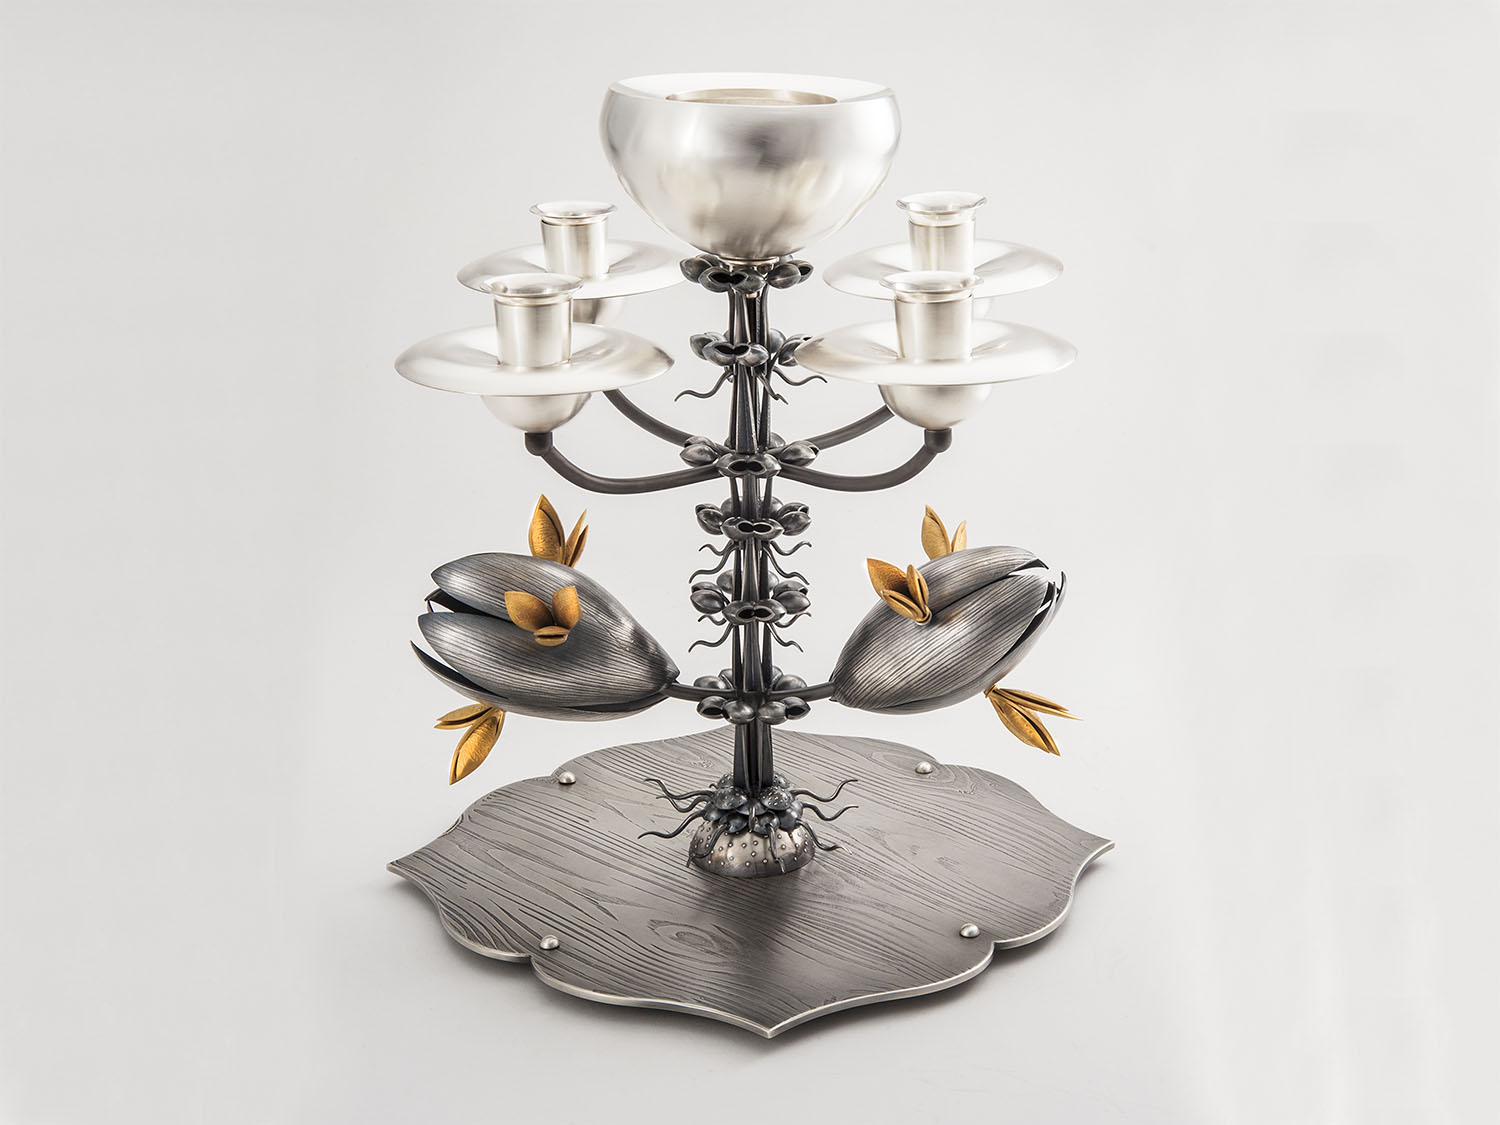 Blossfeldt Candelabrum  |  2015  |  958 & sterling silver, bronze, 24k gold & silver plate  |  15 x 12 x 12 inches